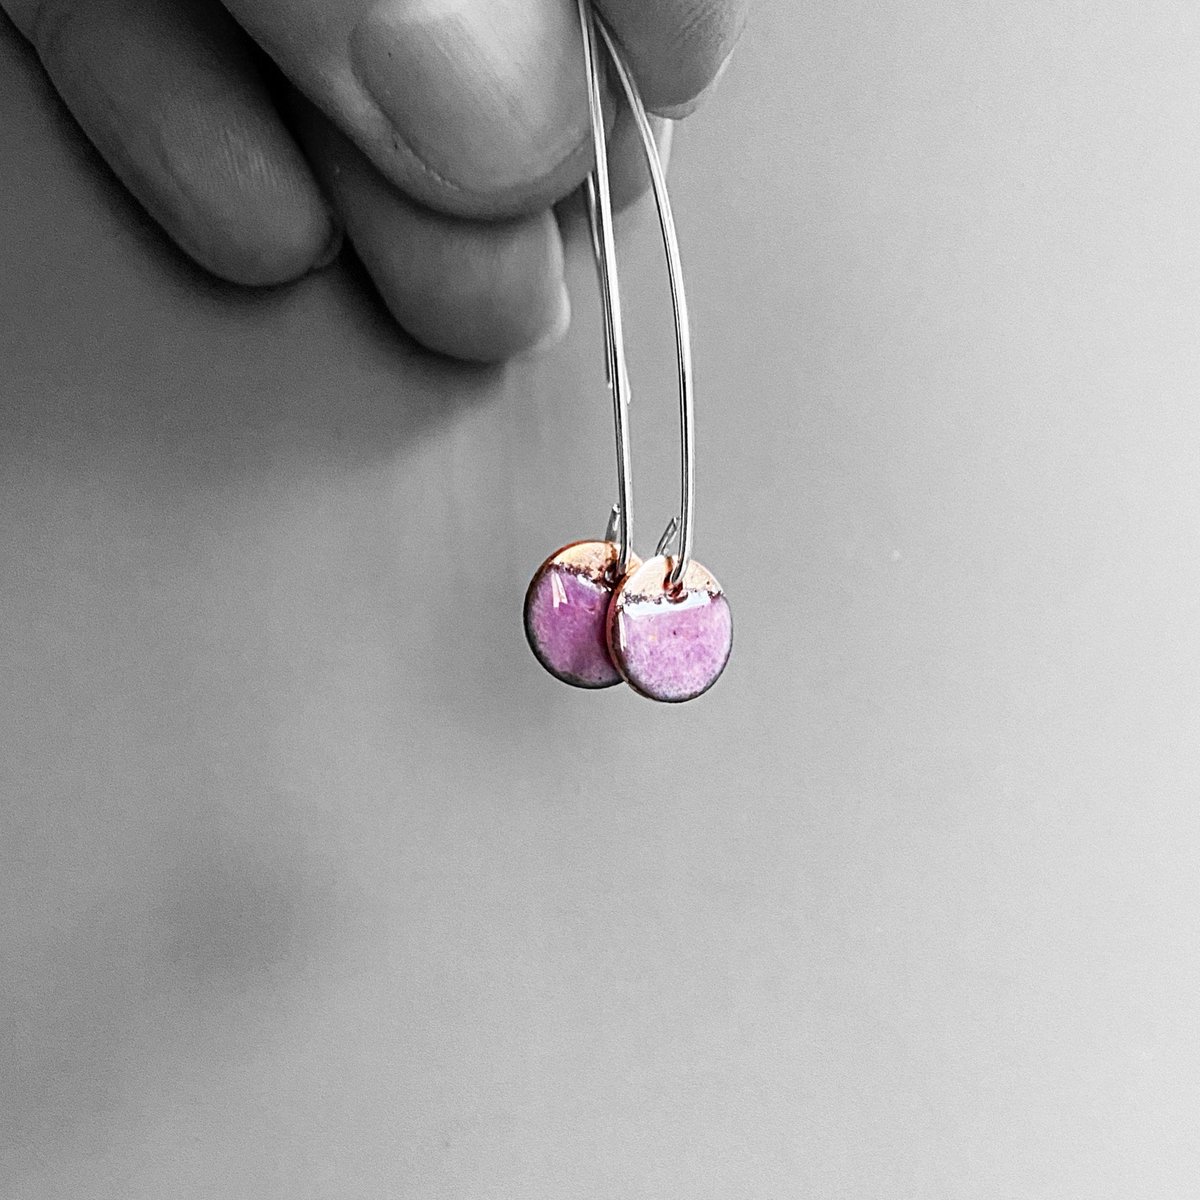 Raspberry Pink Enamel Disc Earrings , Cute Geometric Drop Earrings tuppu.net/5fd54cb3 ##UKGiftHour #shopsmall #MHHSBD #UKHashtags #HandmadeHour #giftideas #bizbubble #inbizhour #DiscEarrings